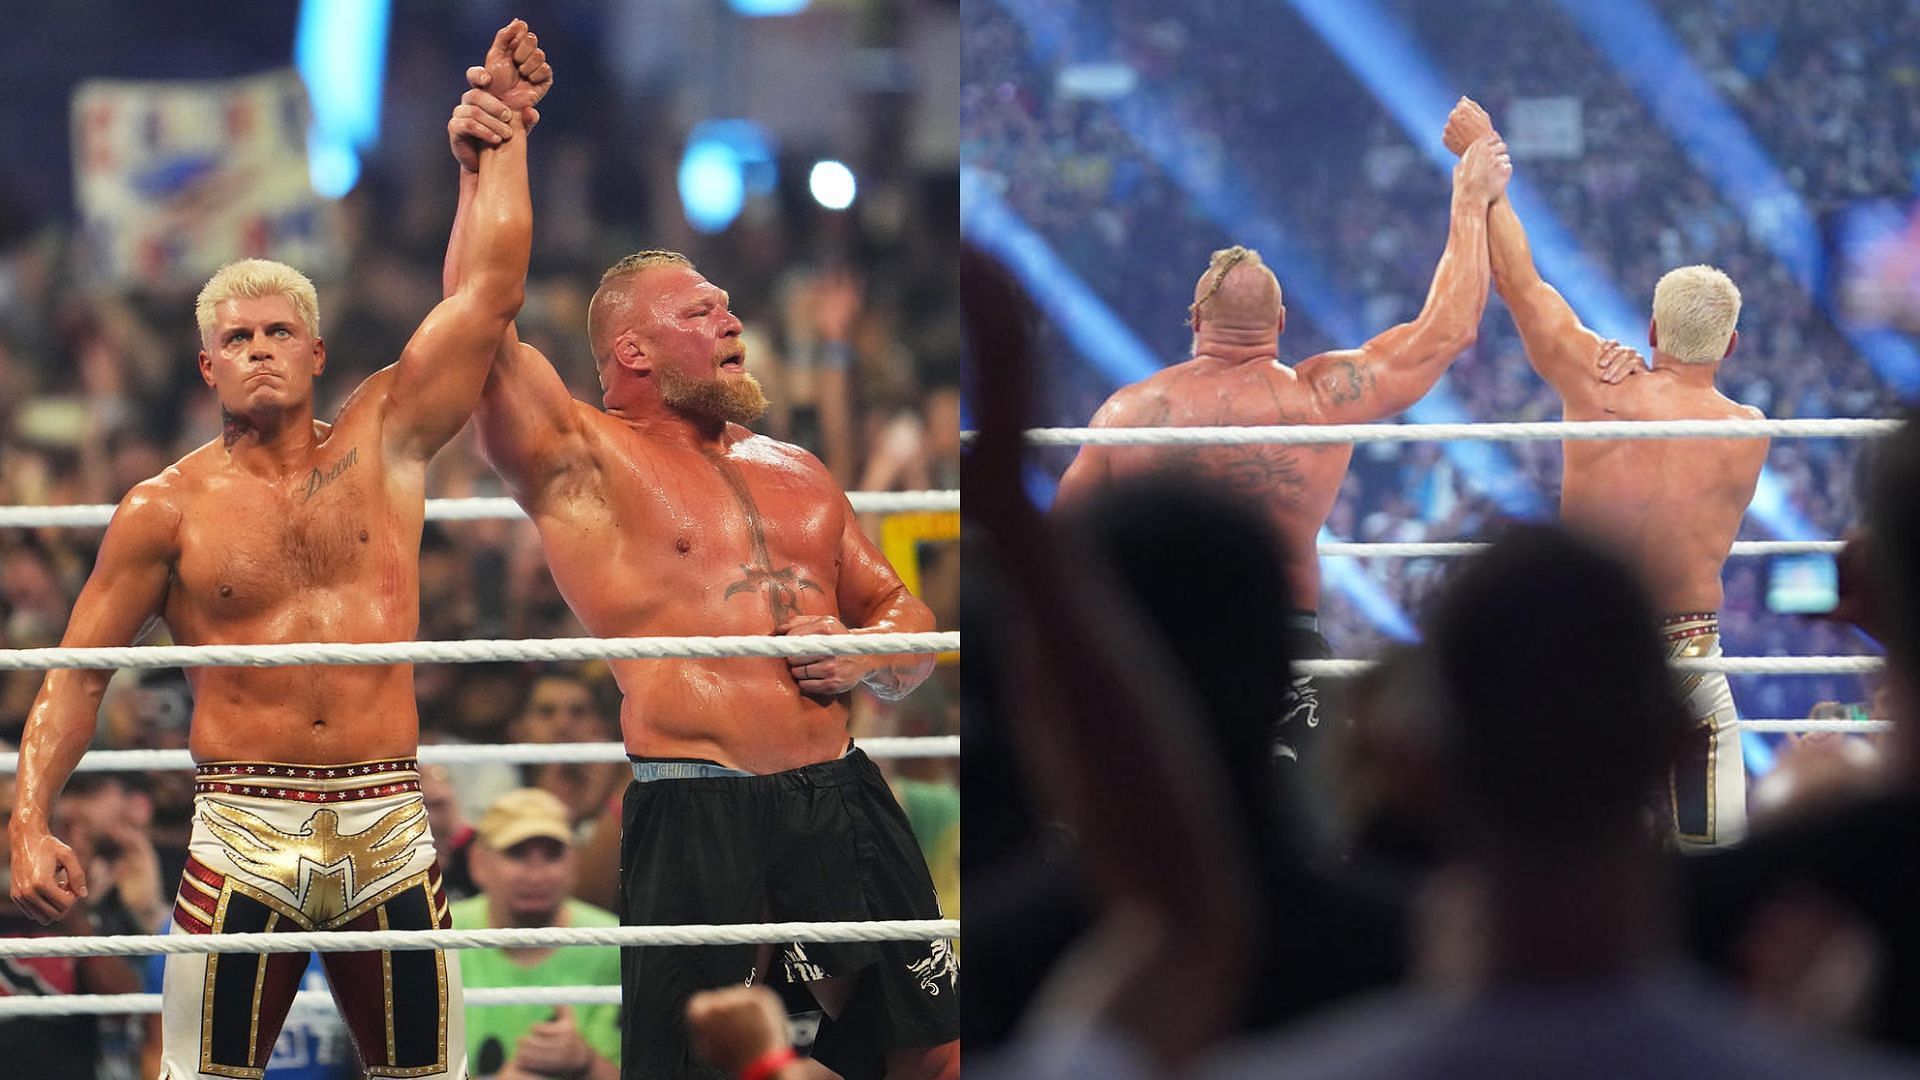 Cody Rhodes and Brock Lesnar battled last night at SummerSlam.